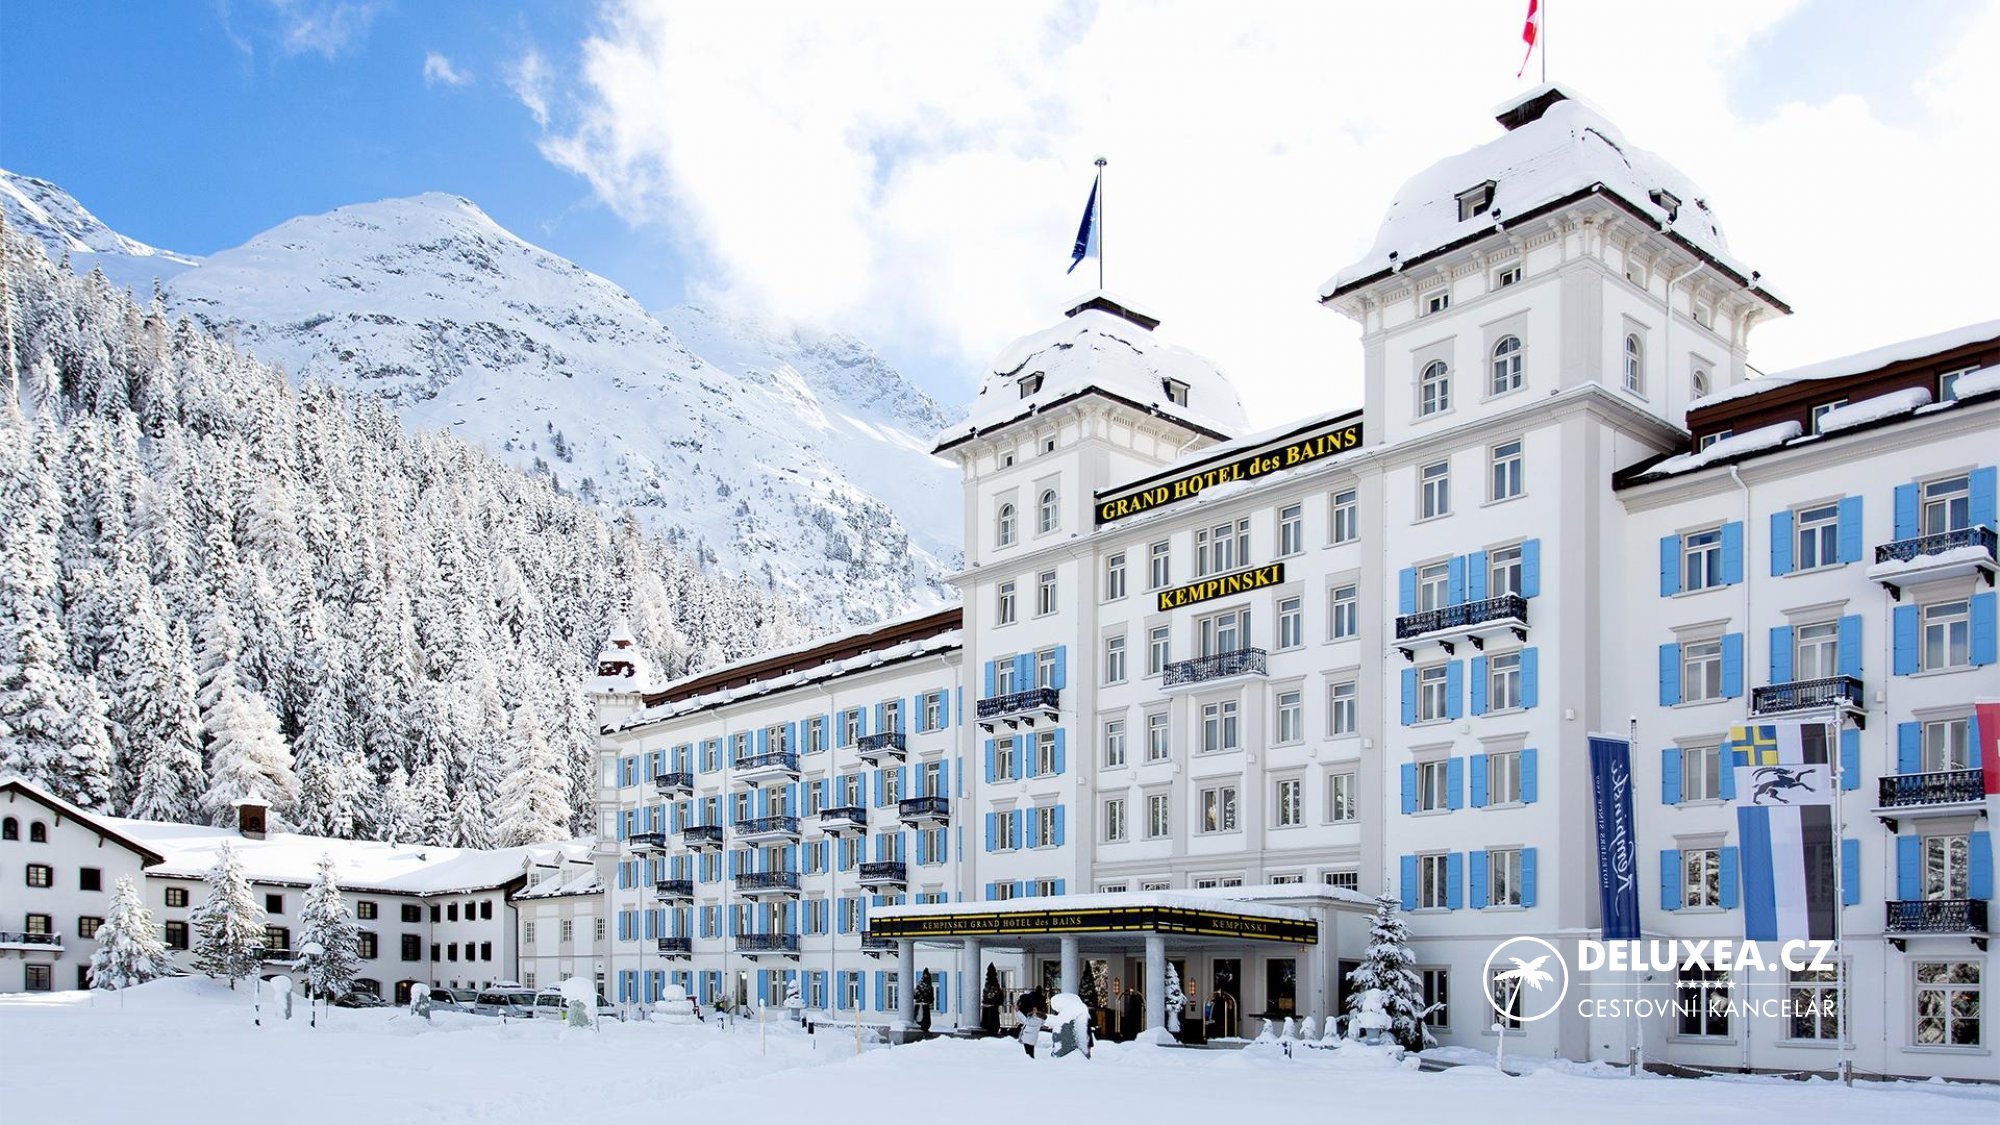 St moritz. Сент Мориц Кемпински. Сент Мориц Швейцария. Швейцария Санкт-Мориц отель Кемпински. Grand Hotel des Bains Швейцария.